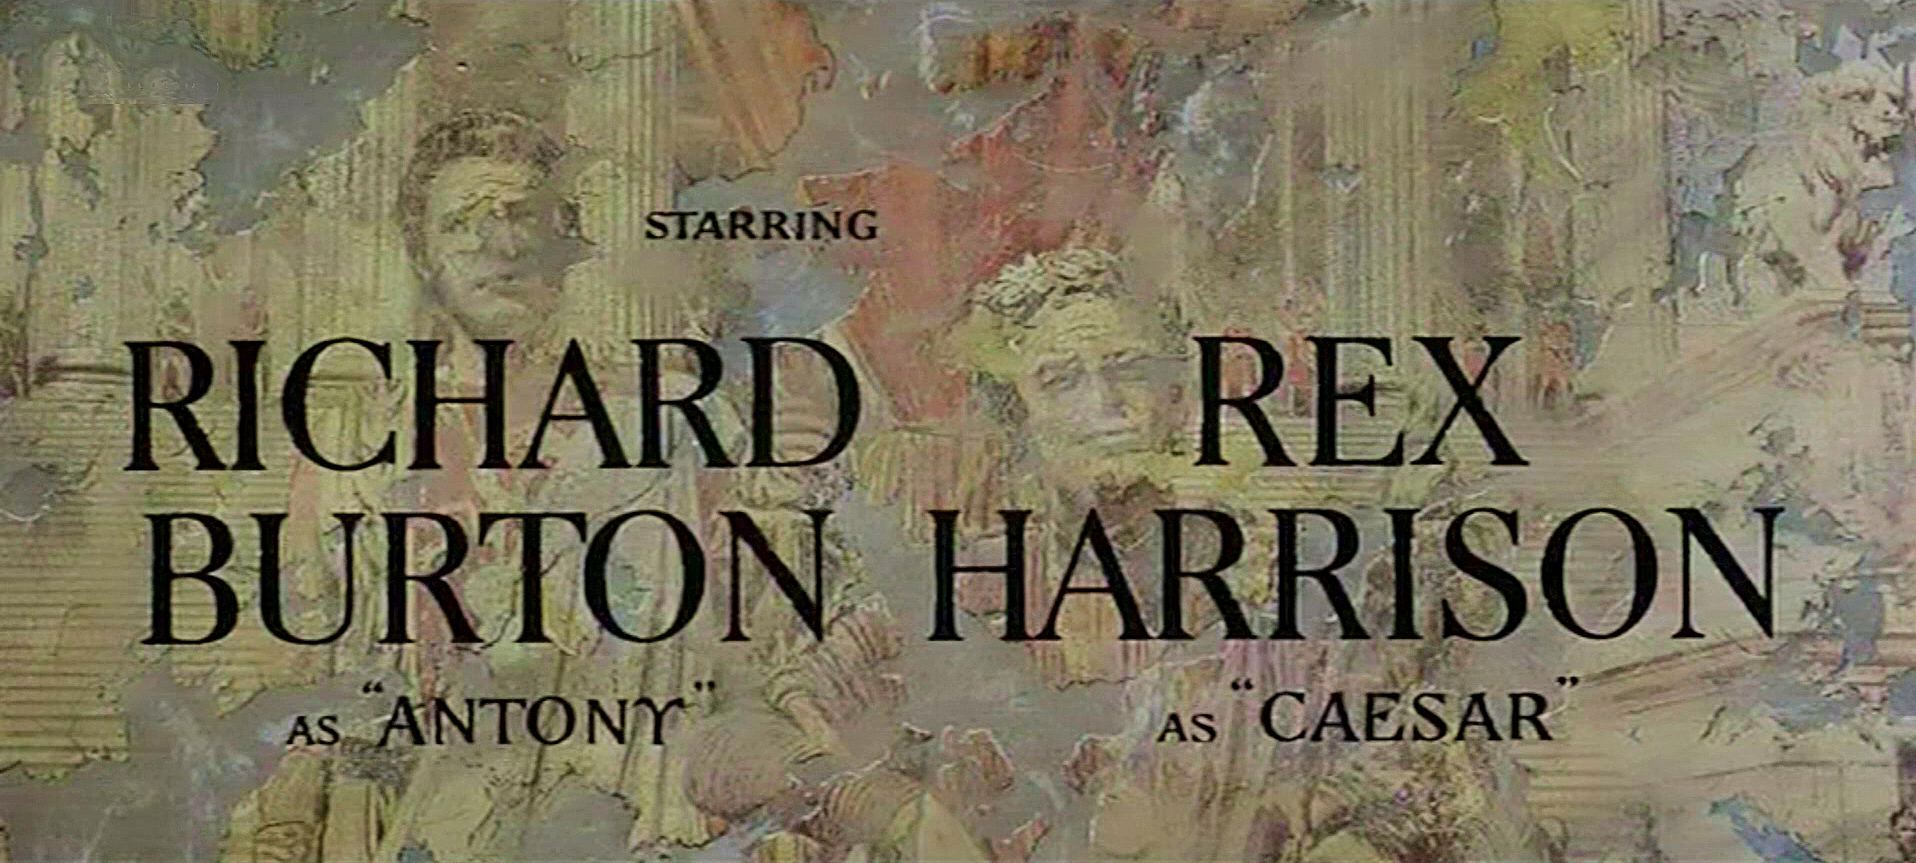 Main title from Cleopatra (1963) (4). Richard Burton as Antony, , Rex Harrison as Caesar